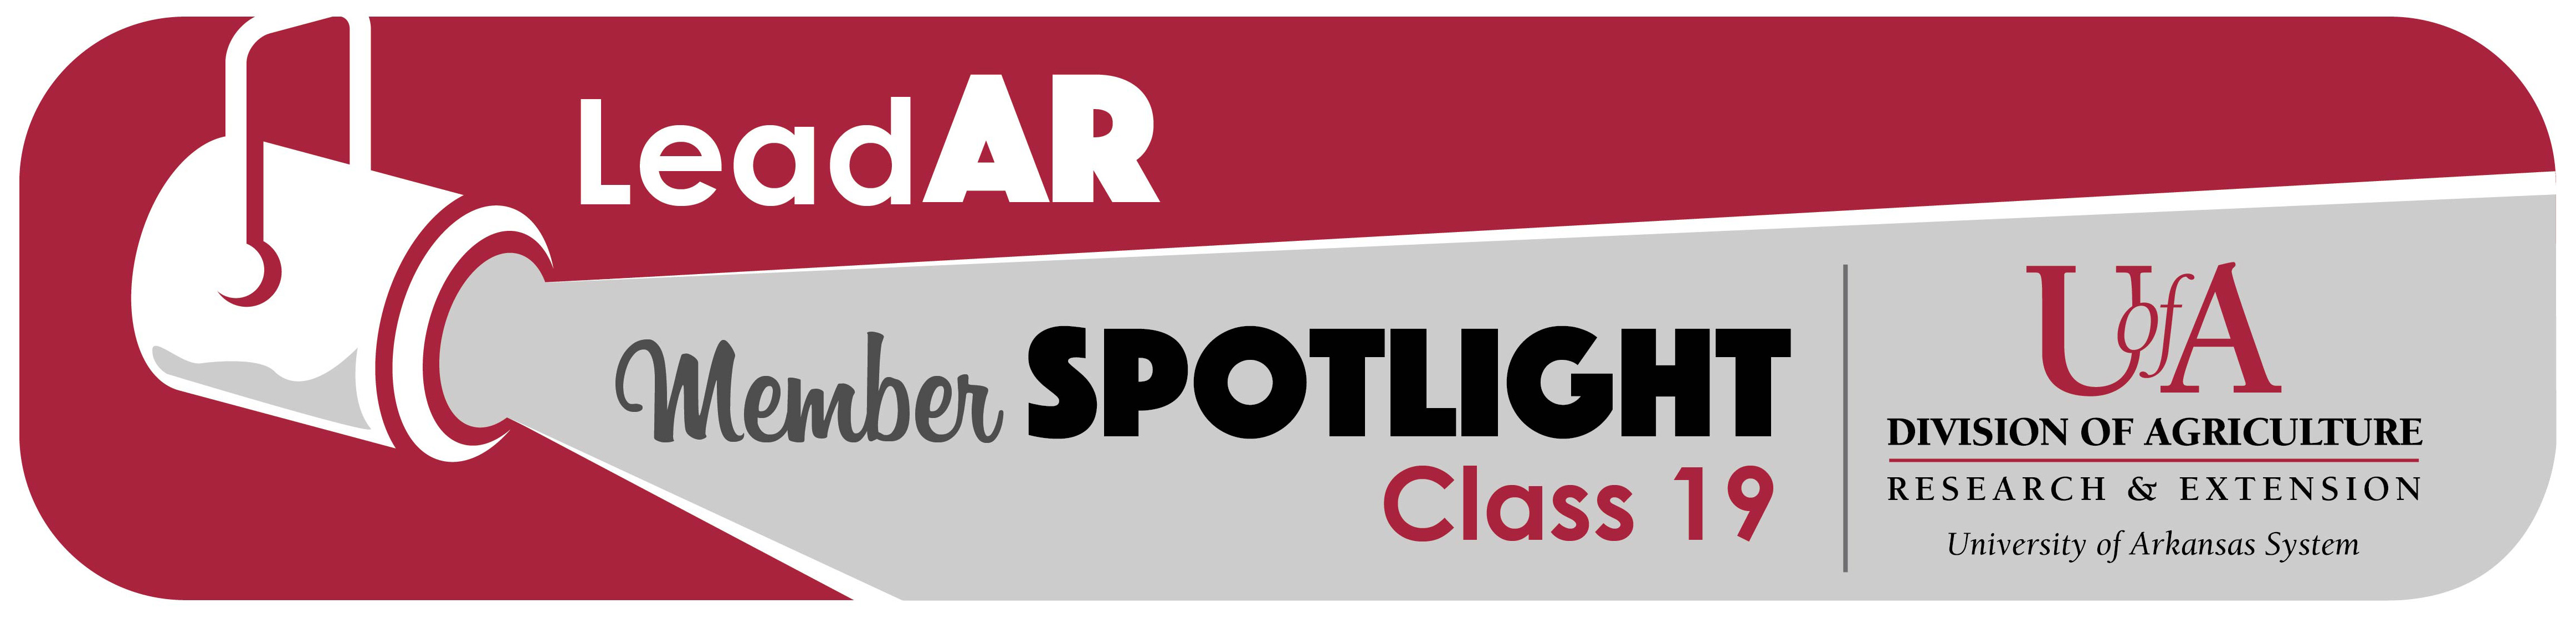 LeadAR Spotlight class 19